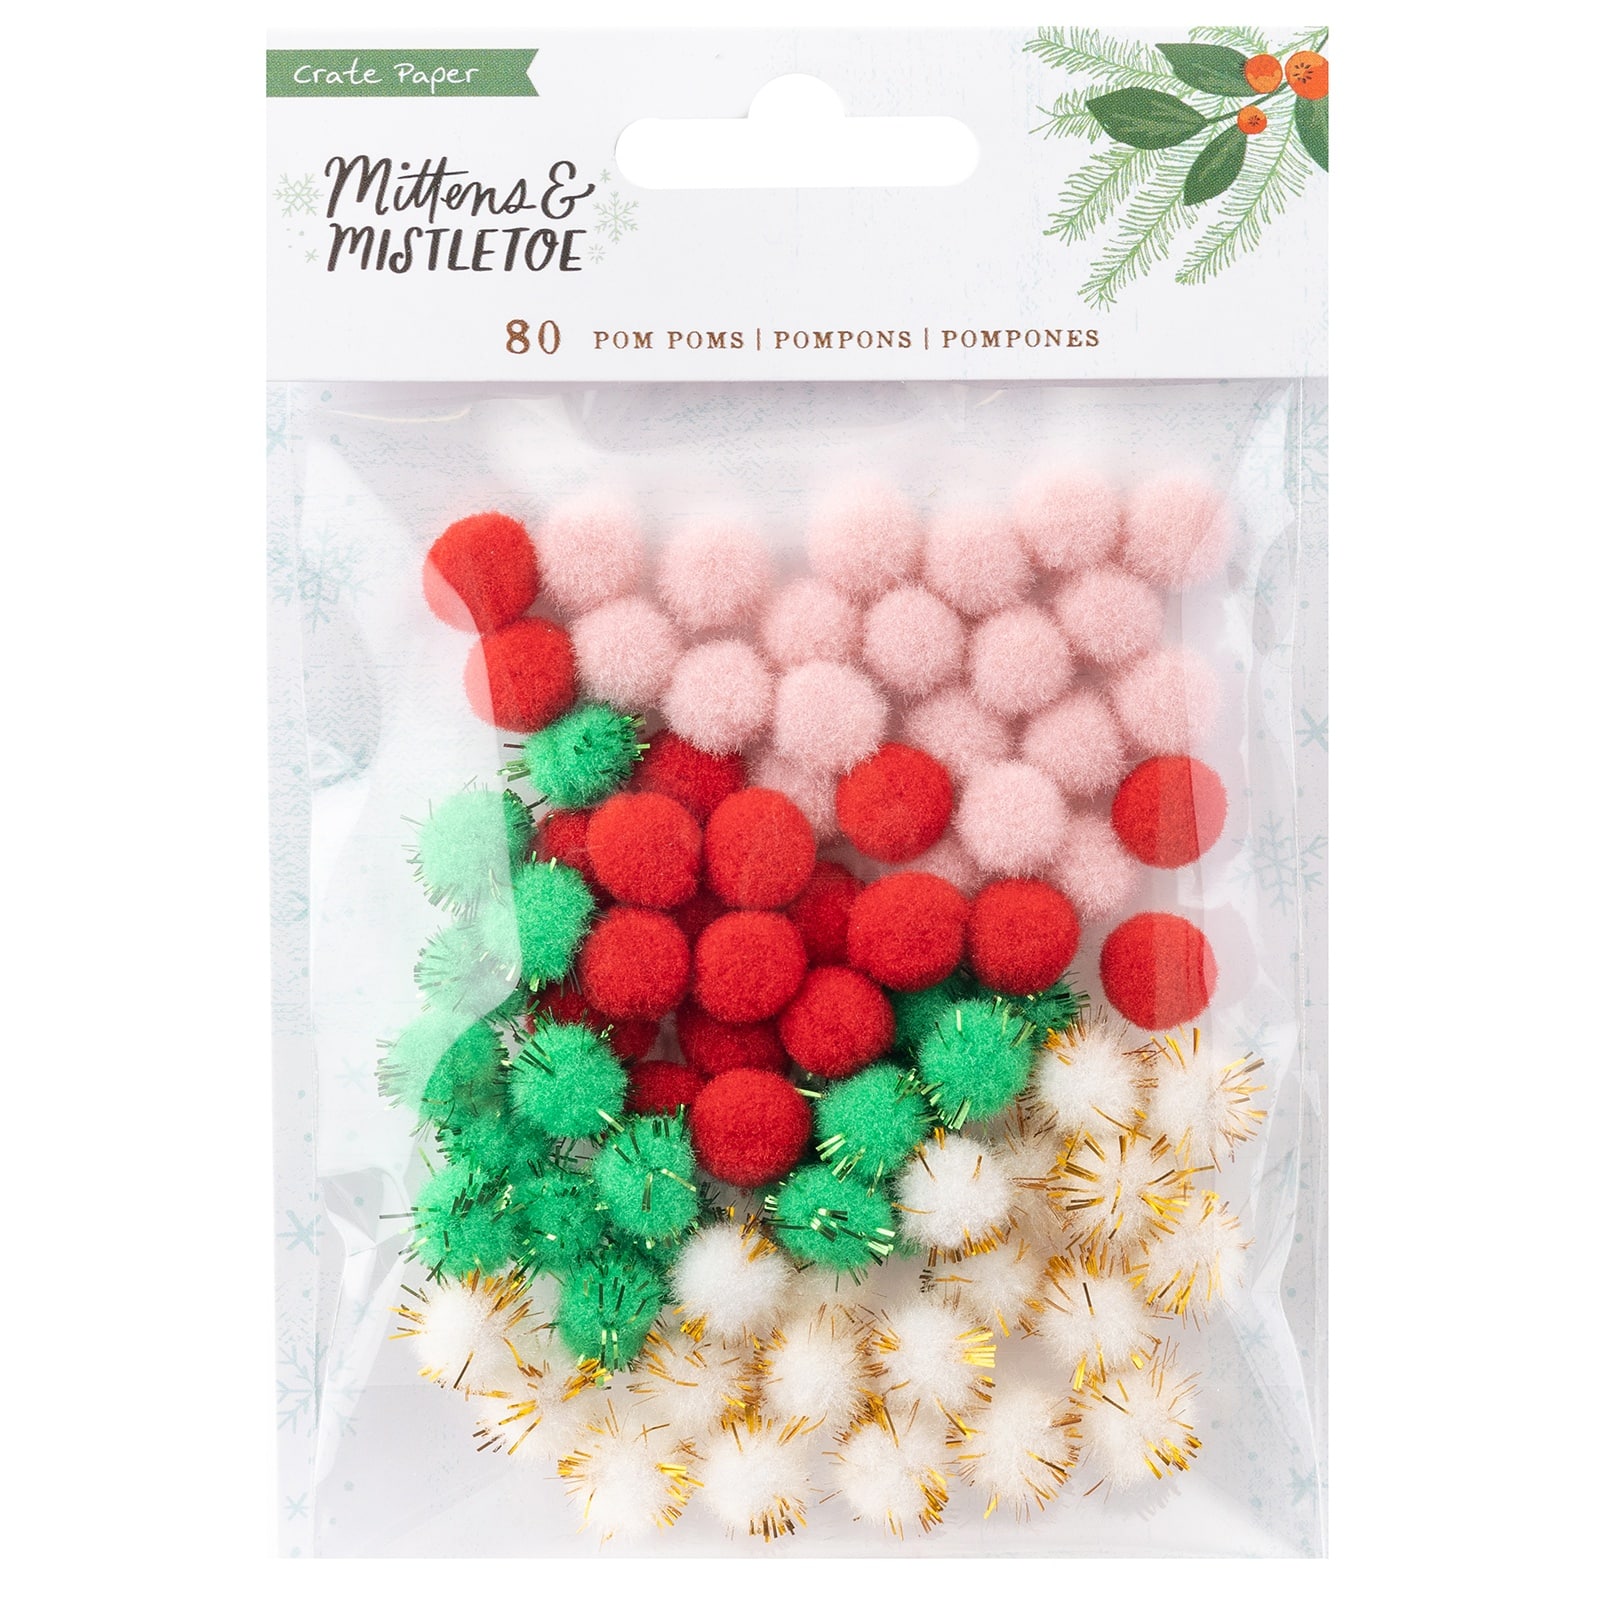 Crate Paper Mittens &#x26; Mistletoe Mixed Pom Poms